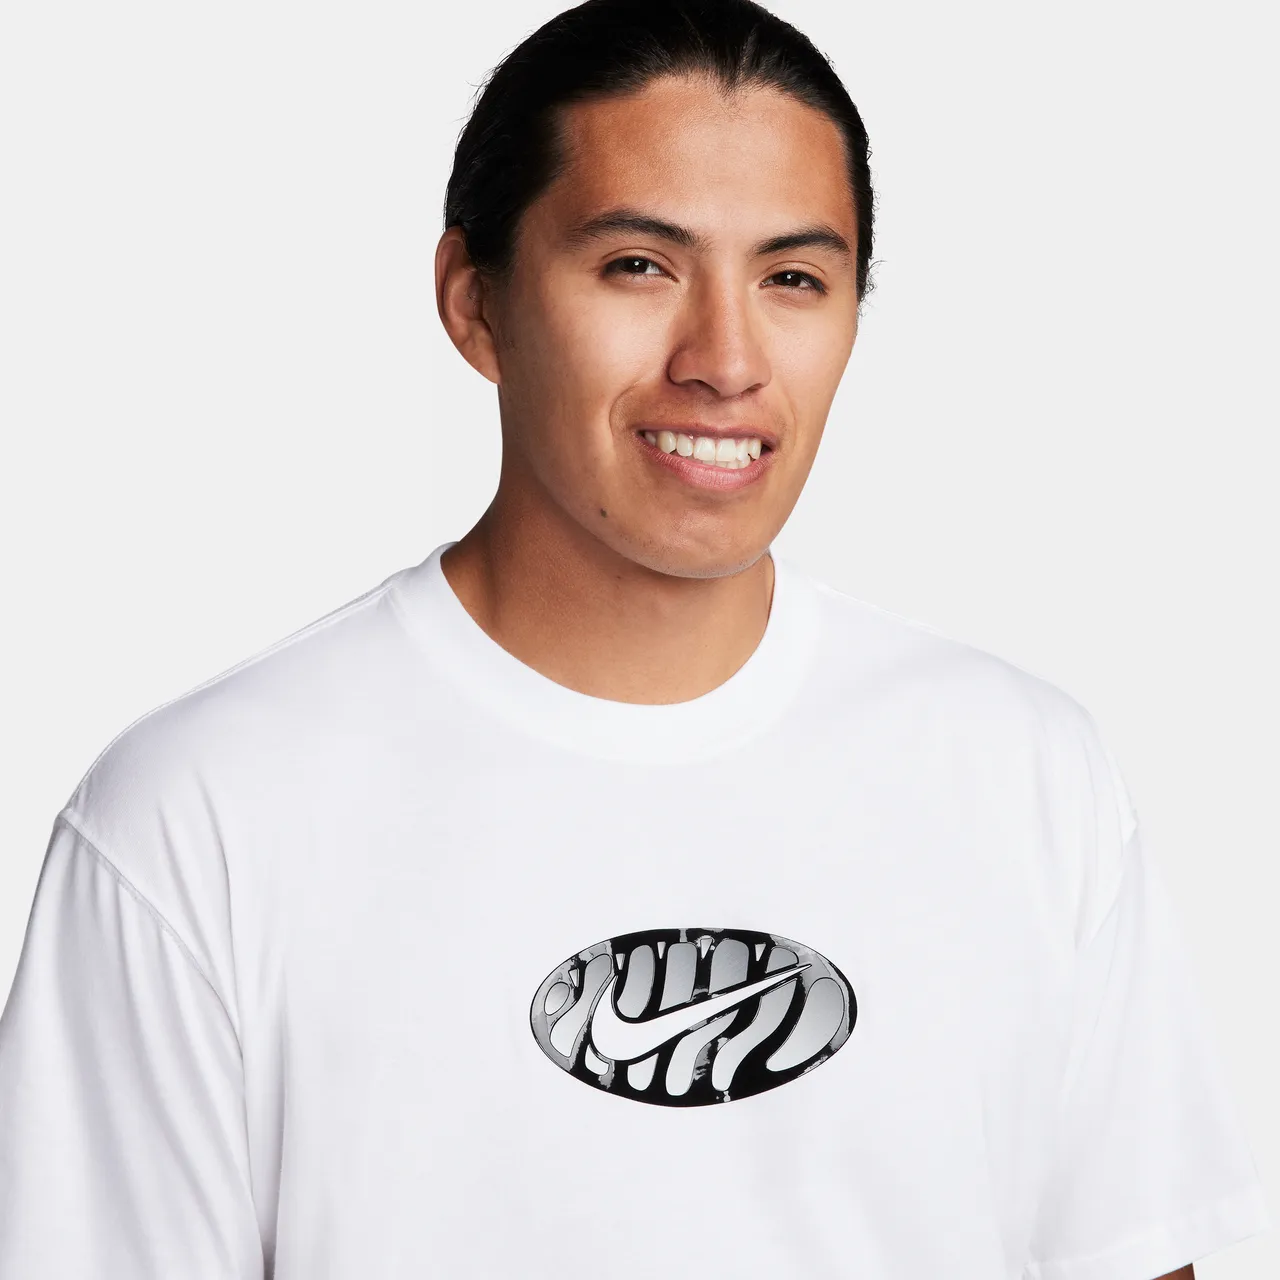 Nike Sportswear Max90 T-Shirt - White - Cotton